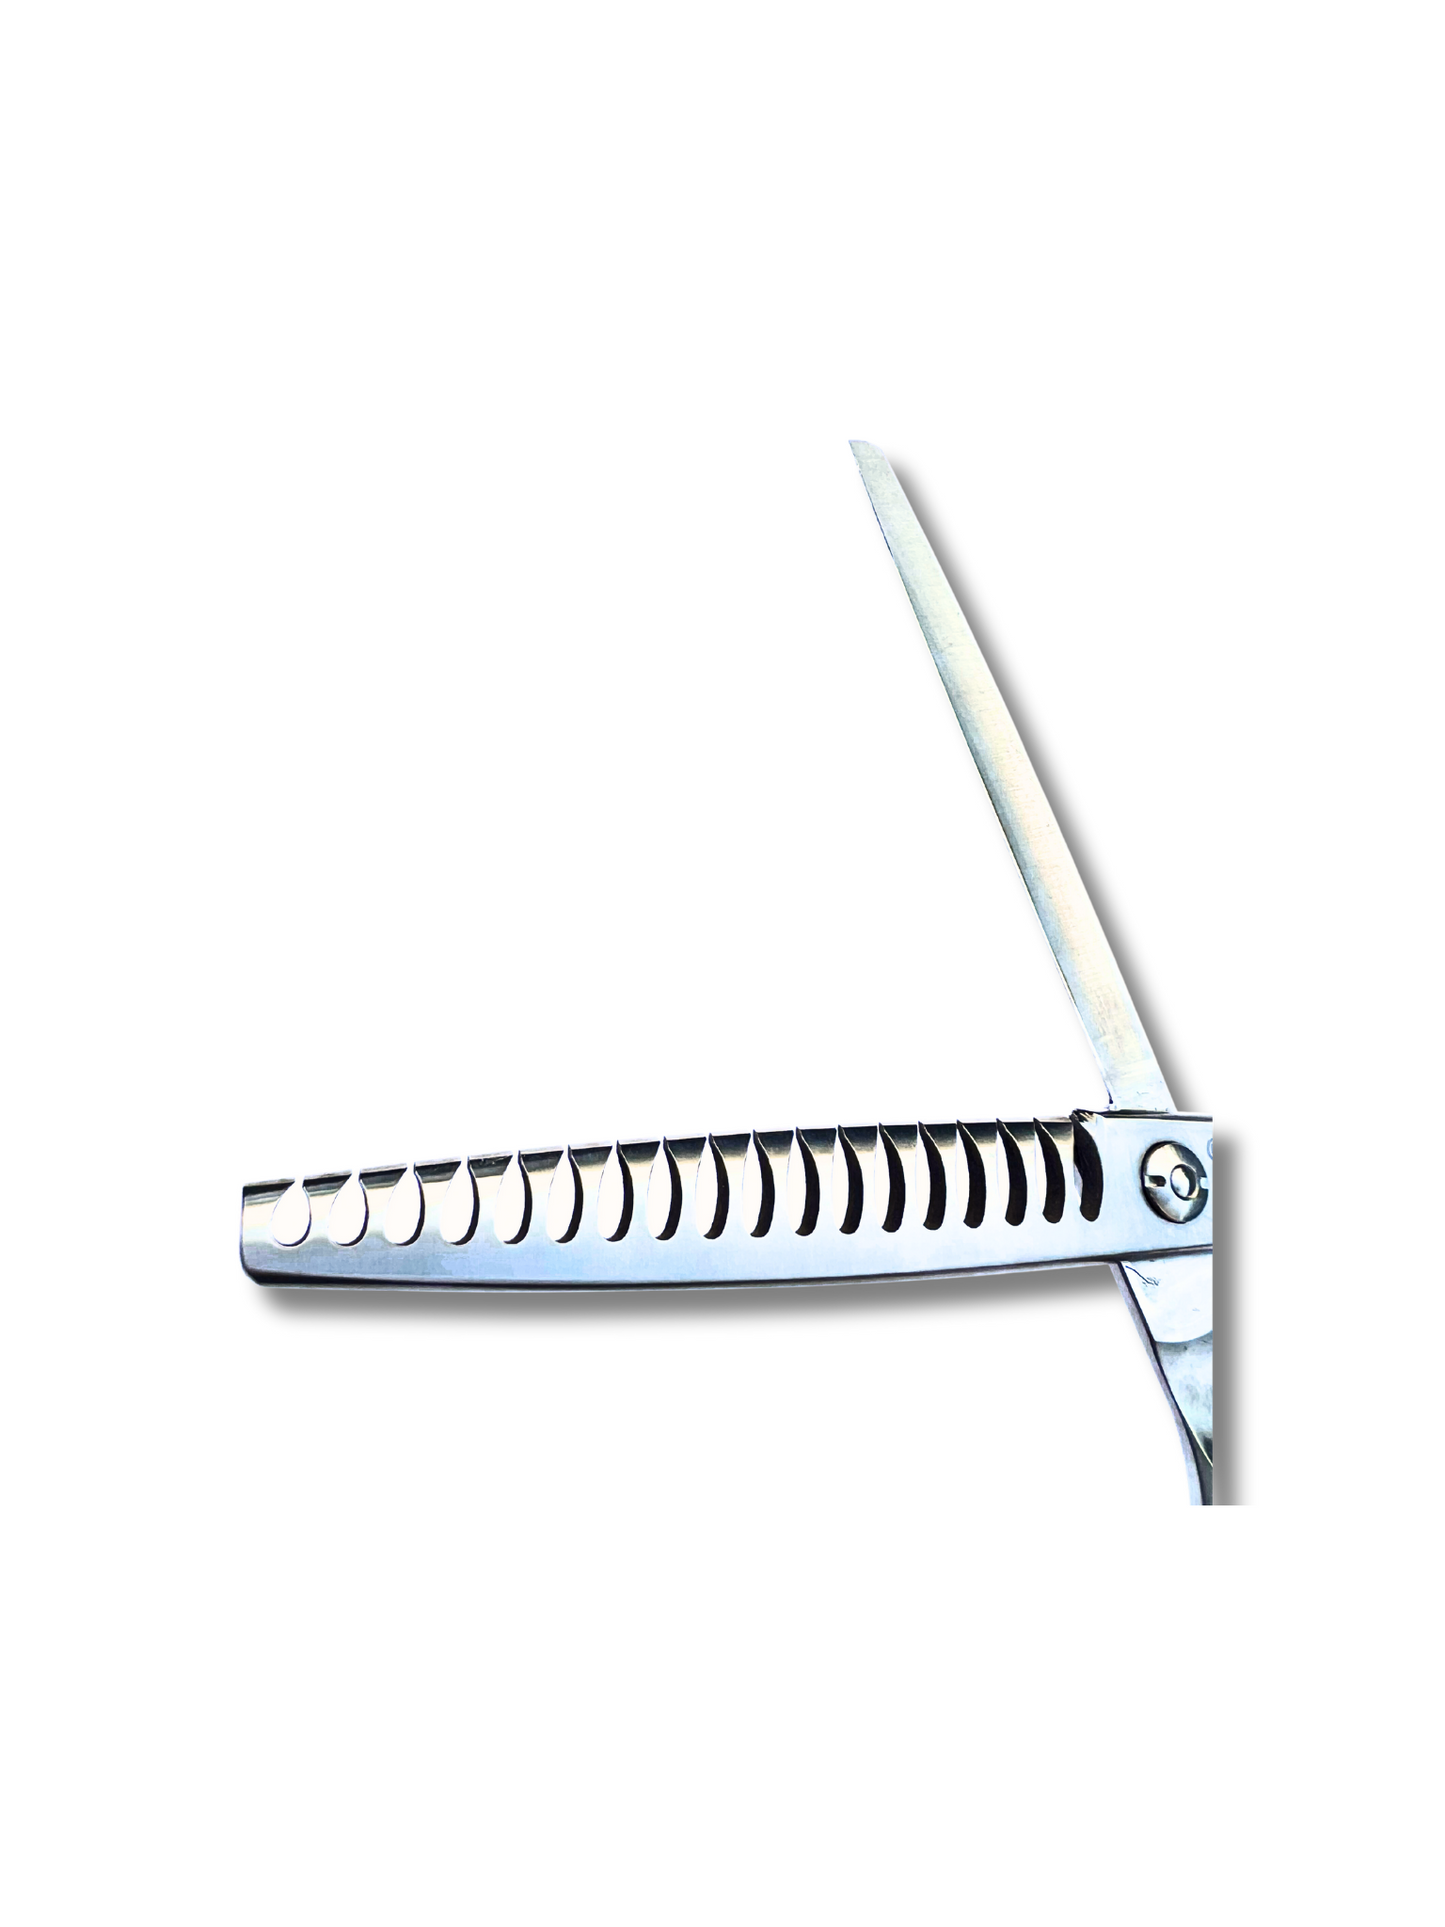 BD-7018 professional straight thinning scissor 7.0" 18 teeth